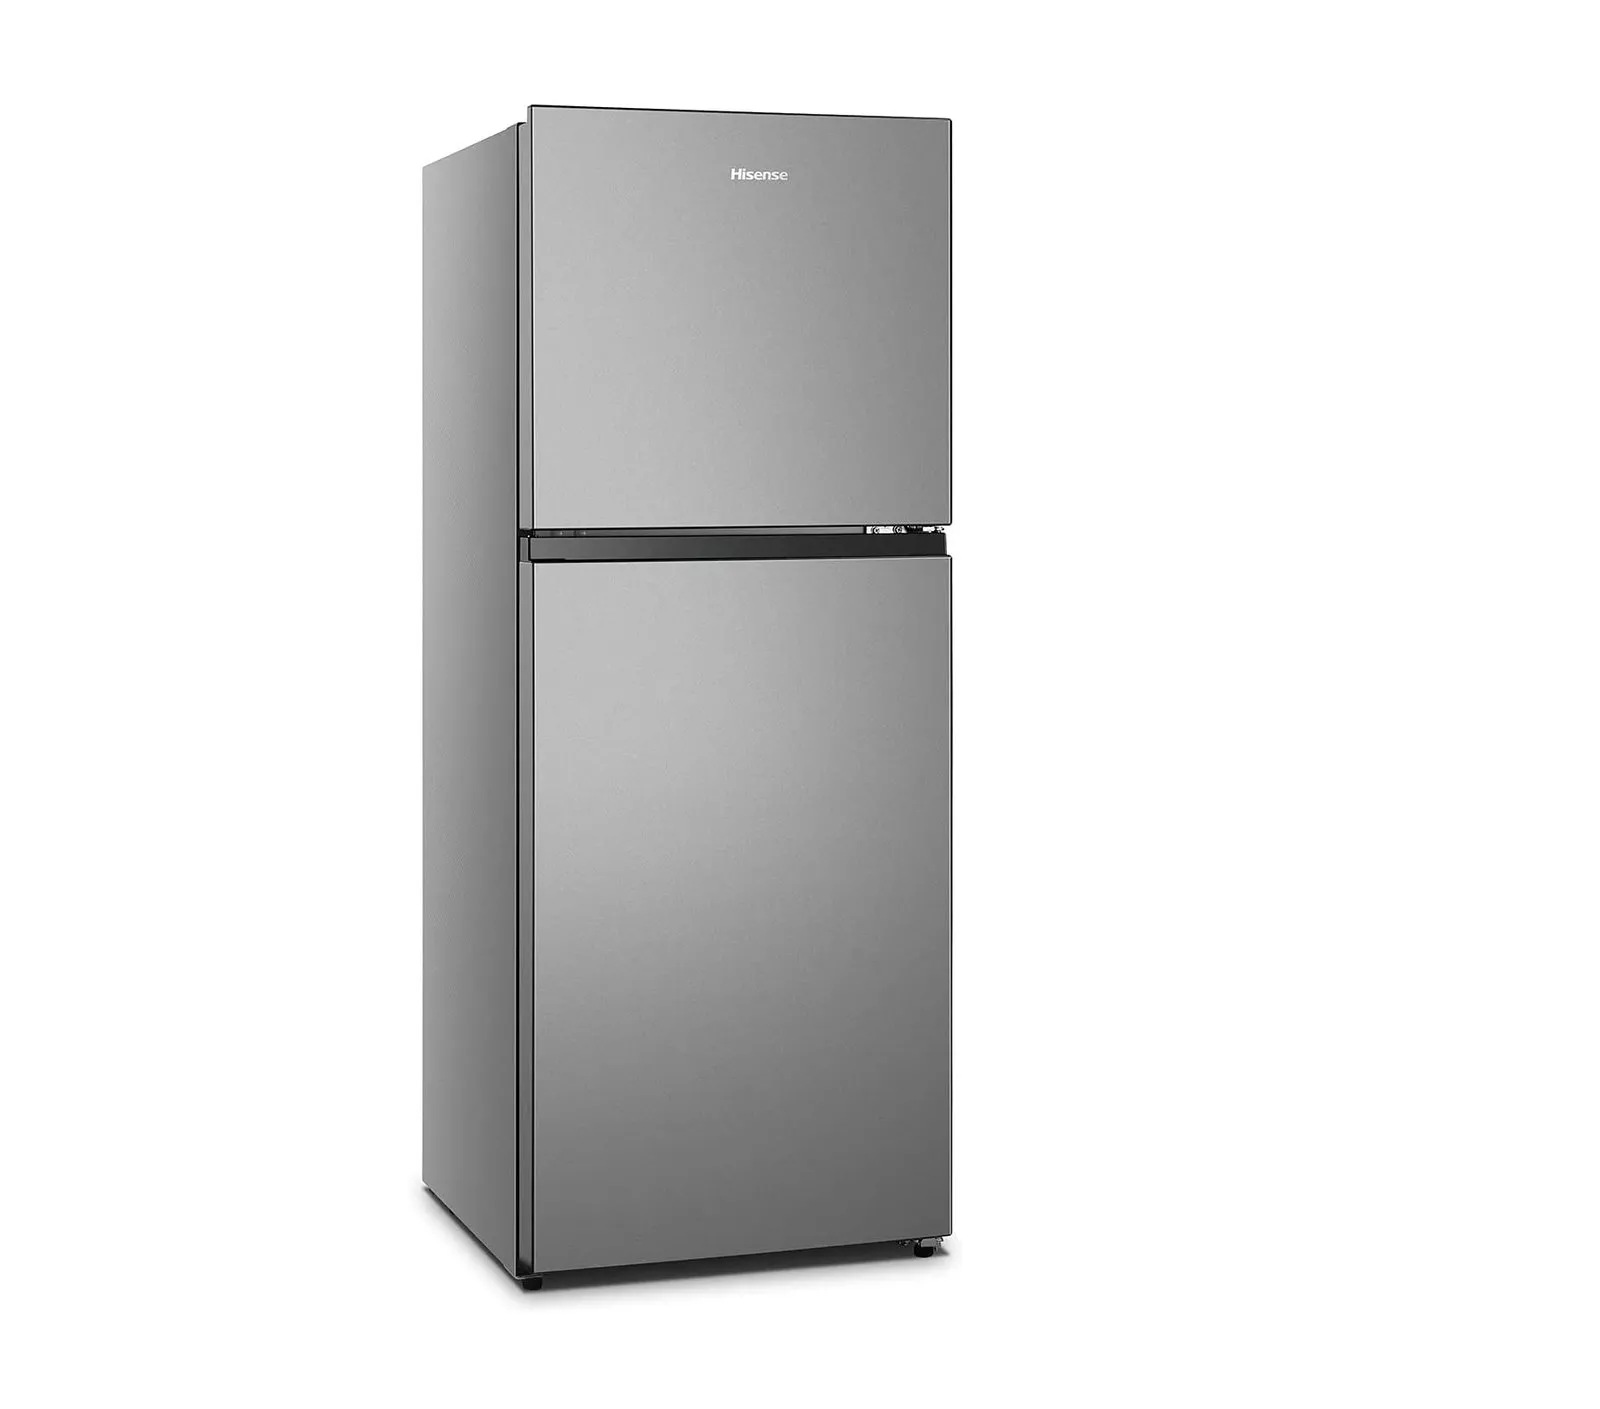 Hisense 264 Liter Refrigerator No Frost Double Door Color Silver Model RT264N4DGN | 1 Year Full 10 Years Compressor Warranty.